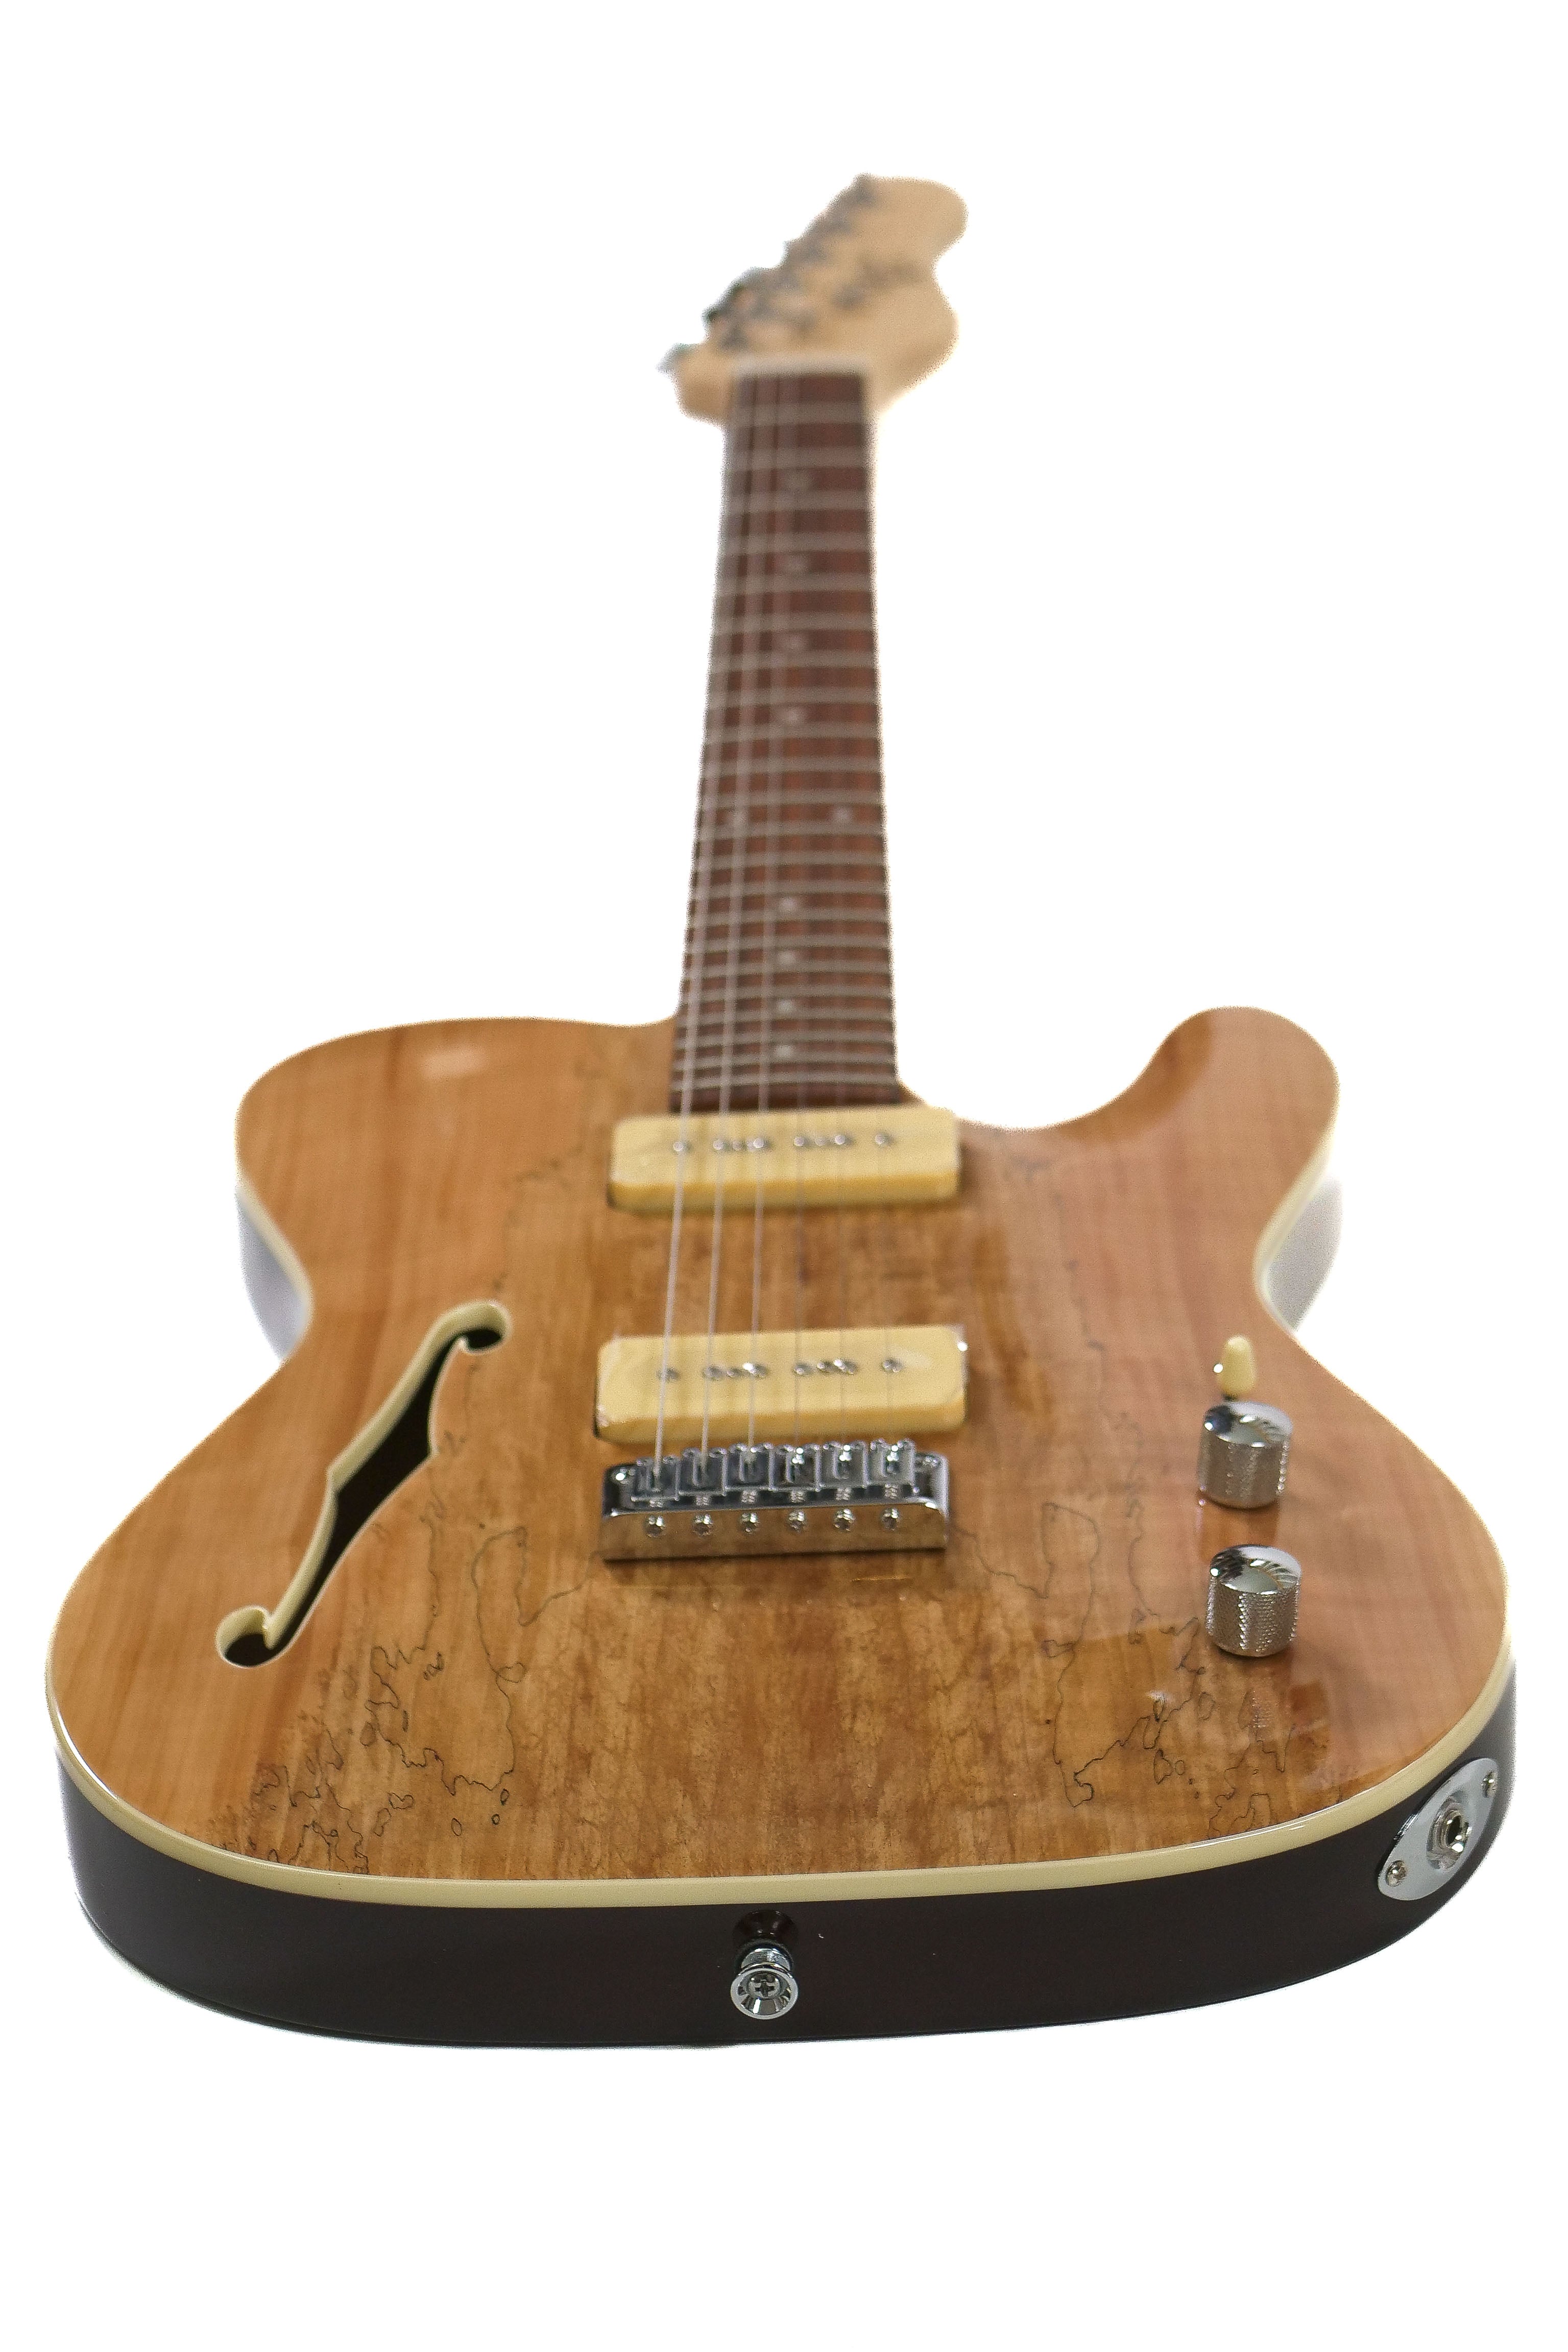 Michael Kelly Thinline Electric Guitar w/ Pickup